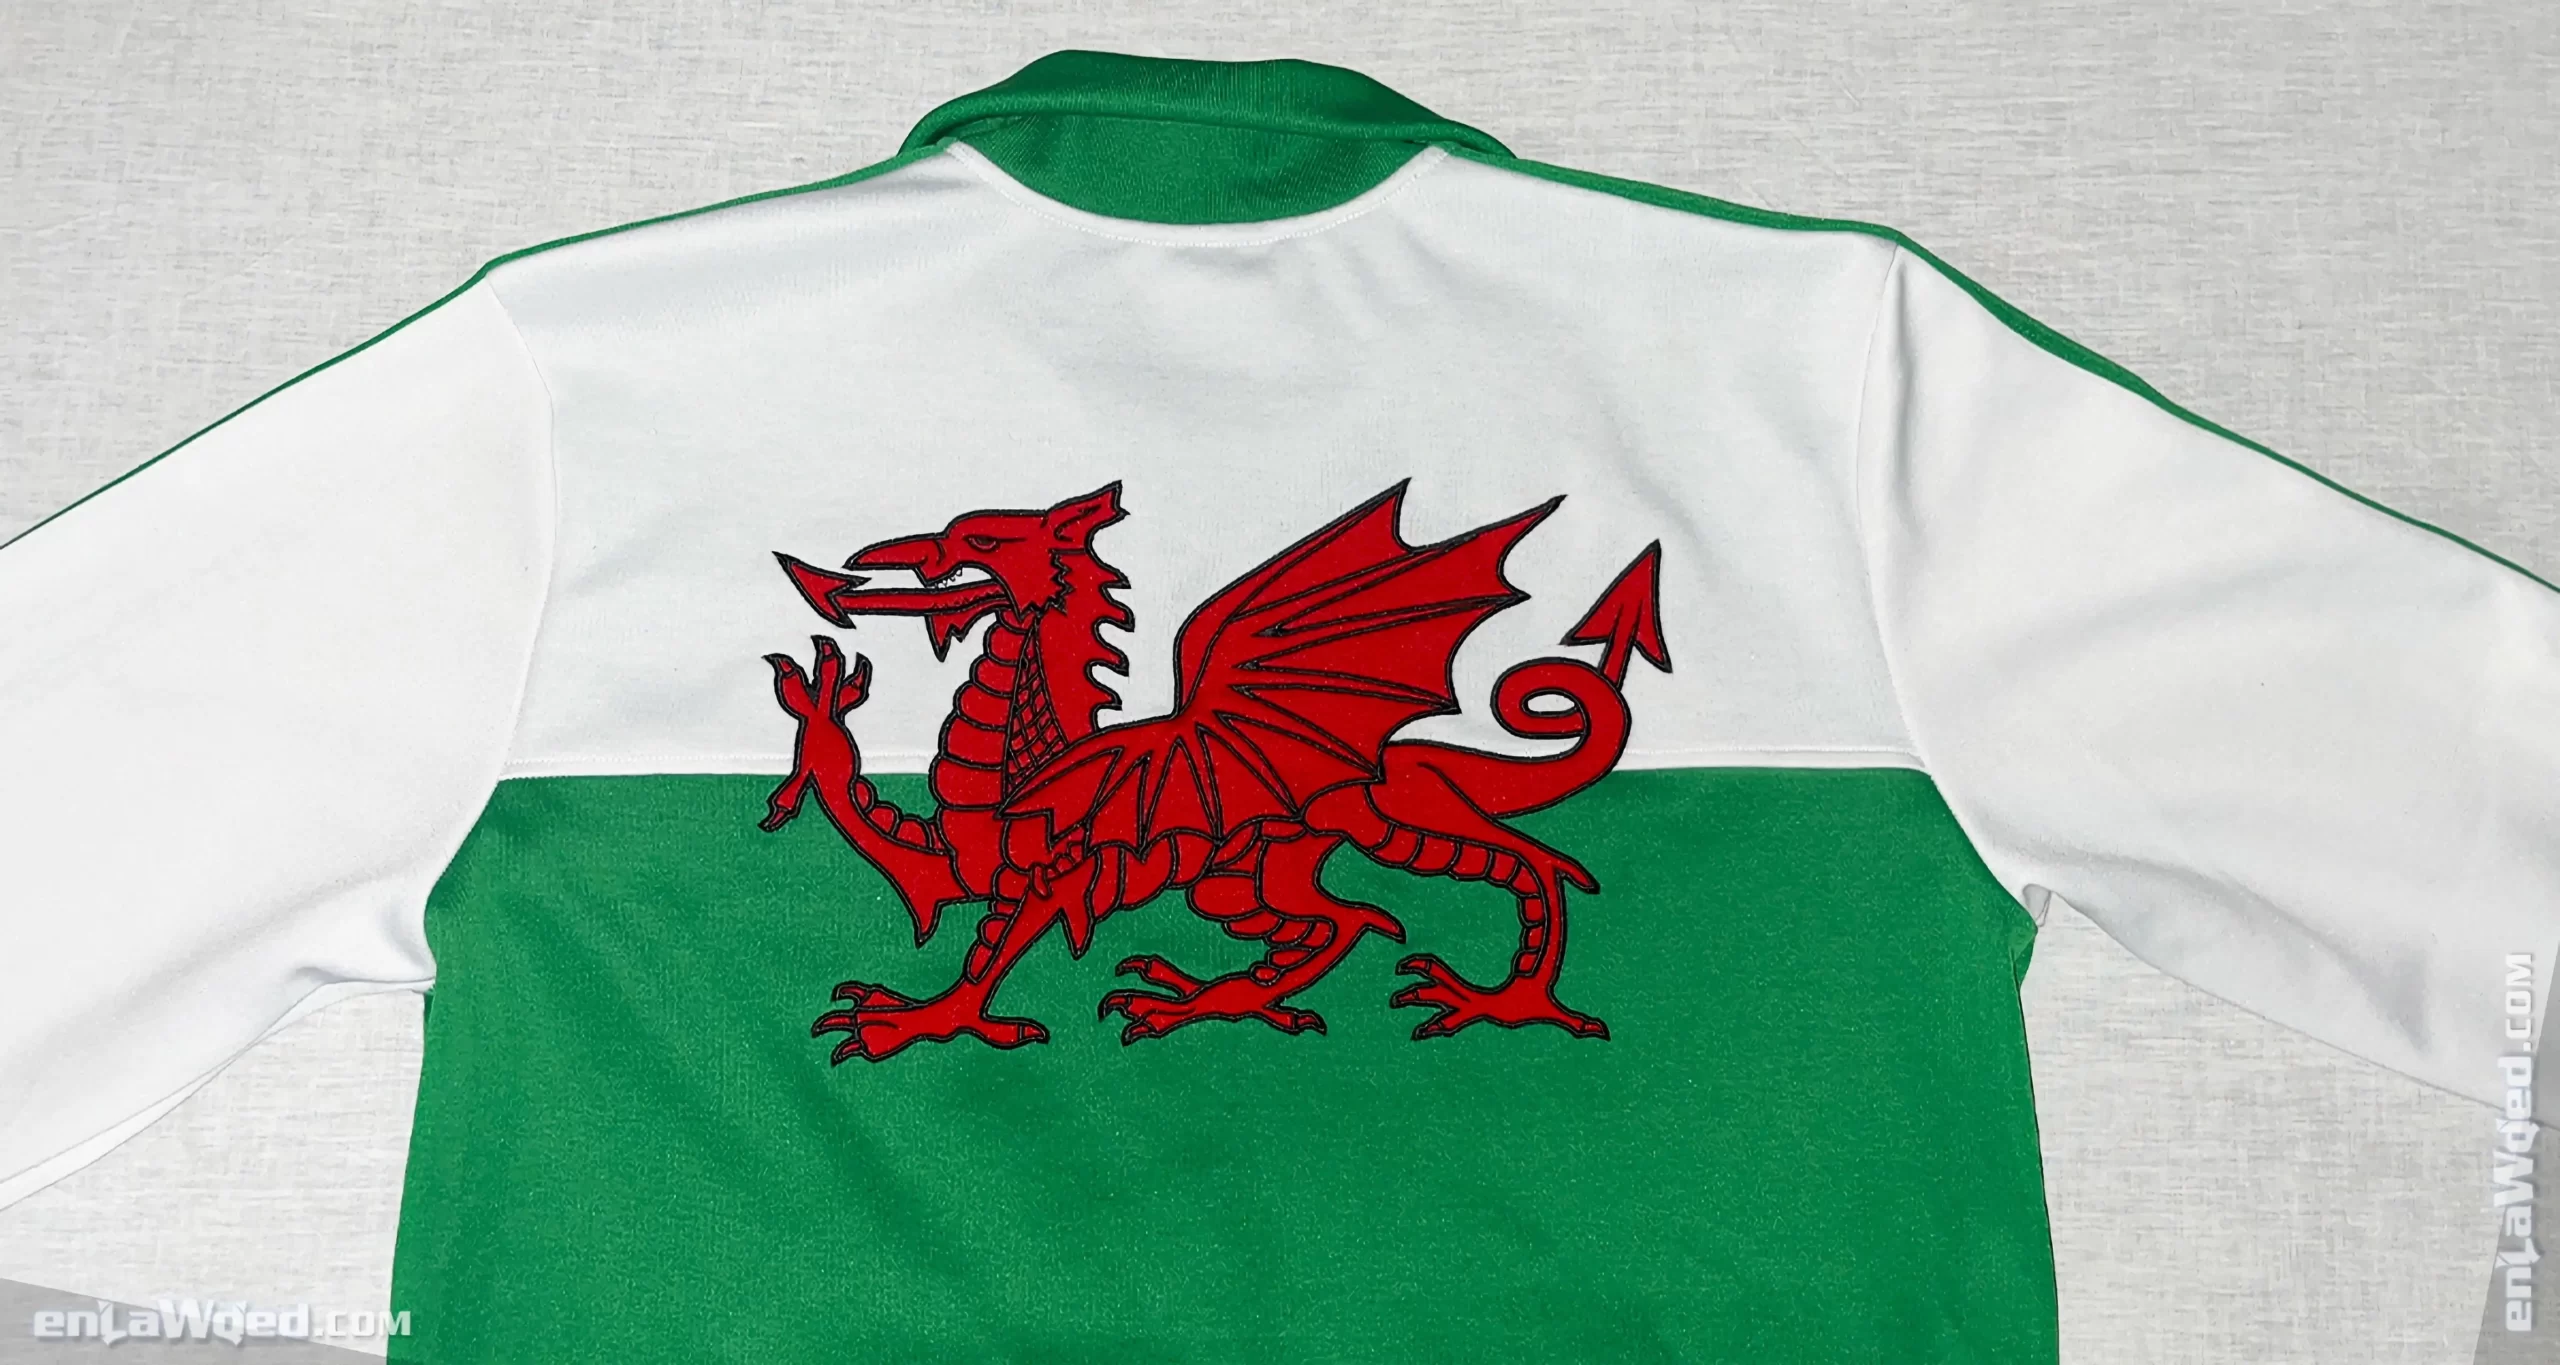 Men’s 2008 Wales TT by Adidas Originals: Heartwarming (EnLawded.com file #lp1mzh77126259da0wkfv0deg)